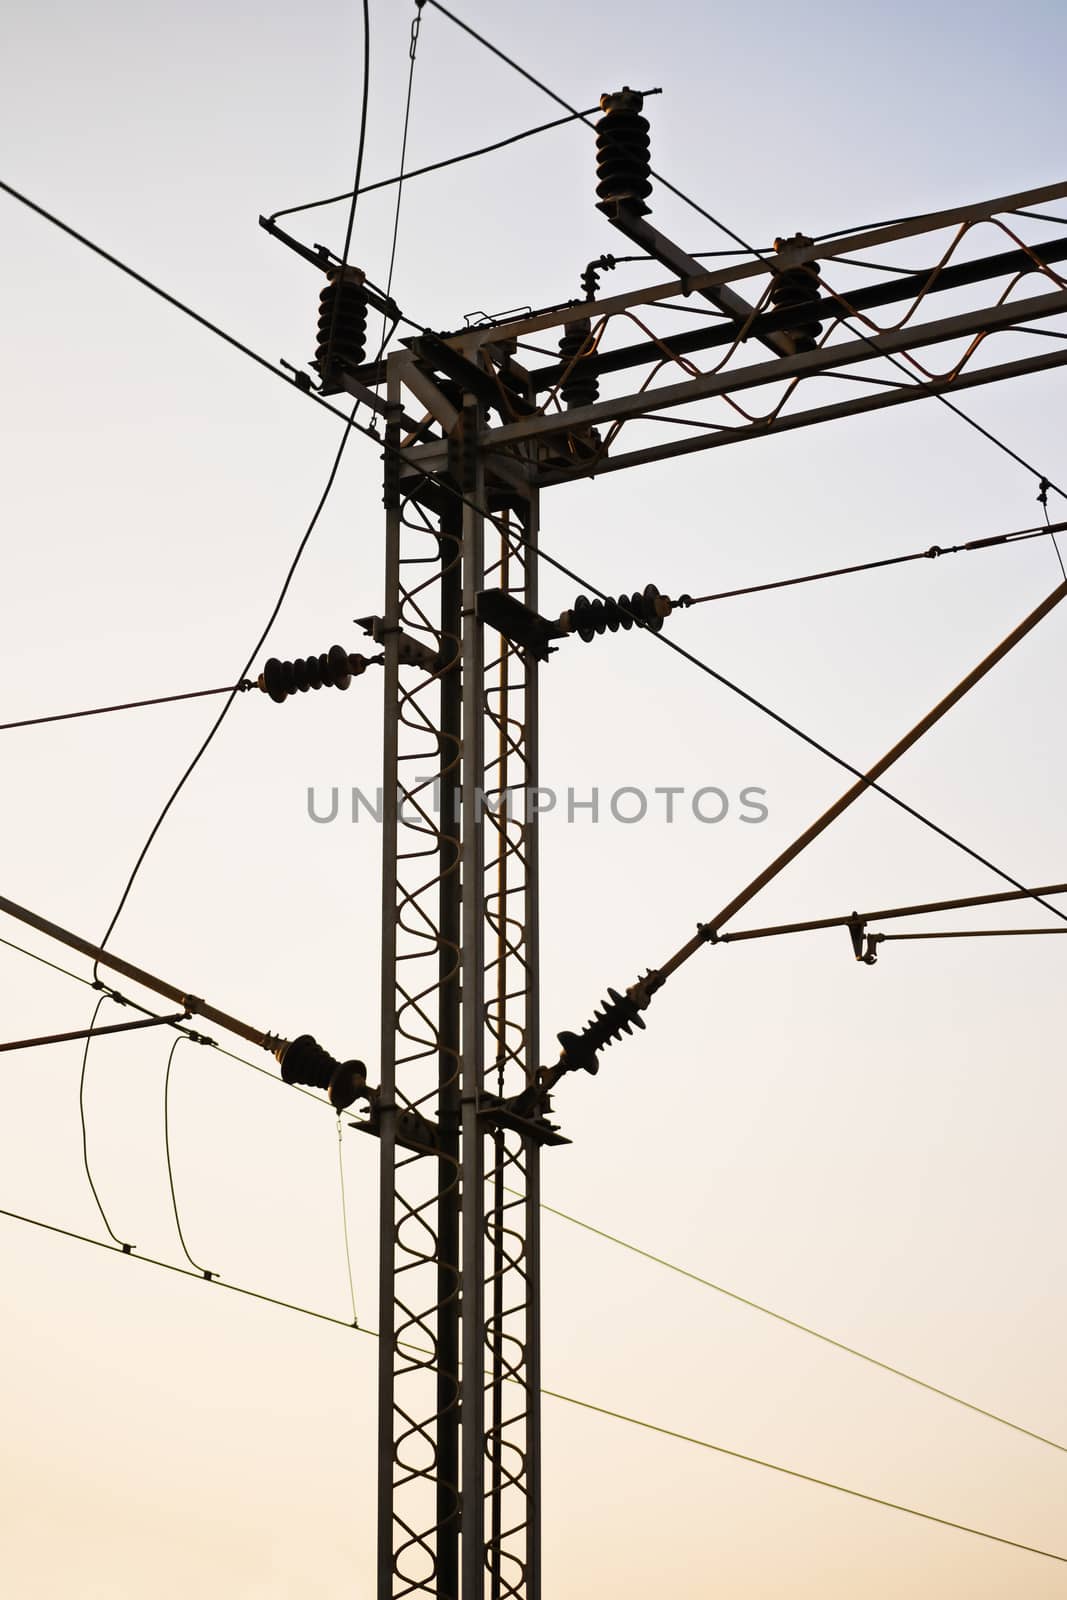 Railroad transmission lines by Mendelex